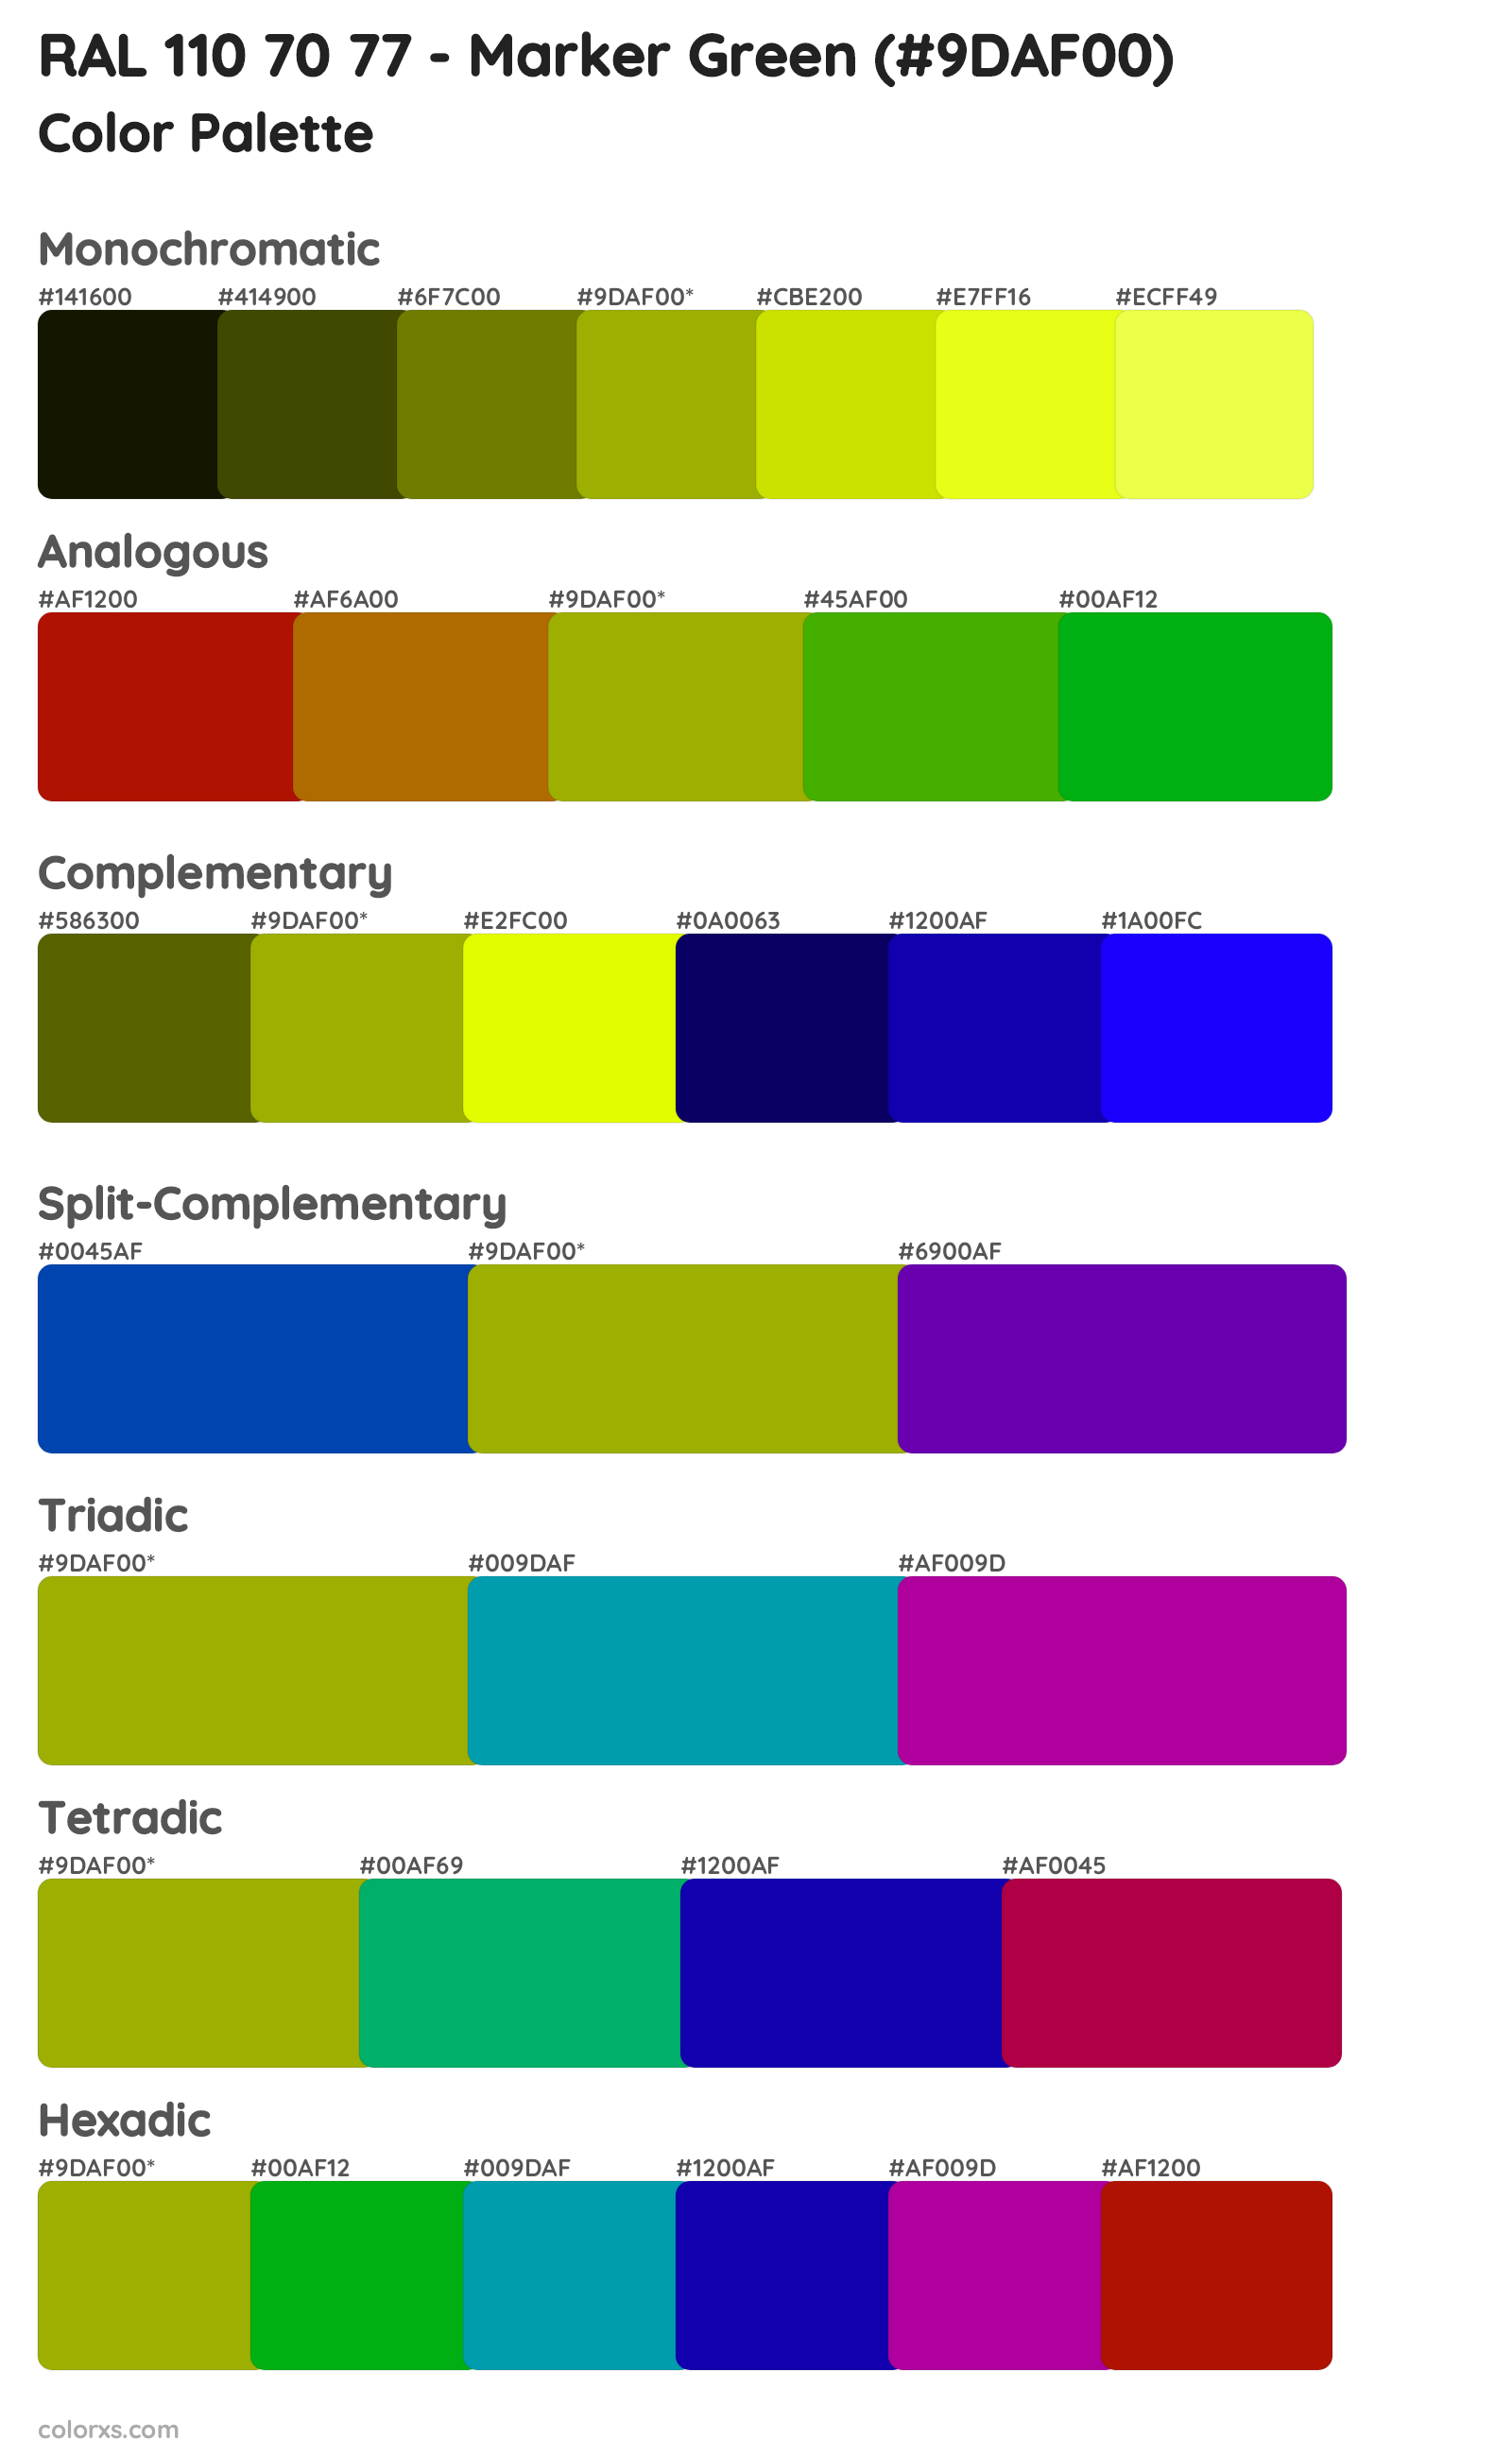 RAL 110 70 77 - Marker Green Color Scheme Palettes